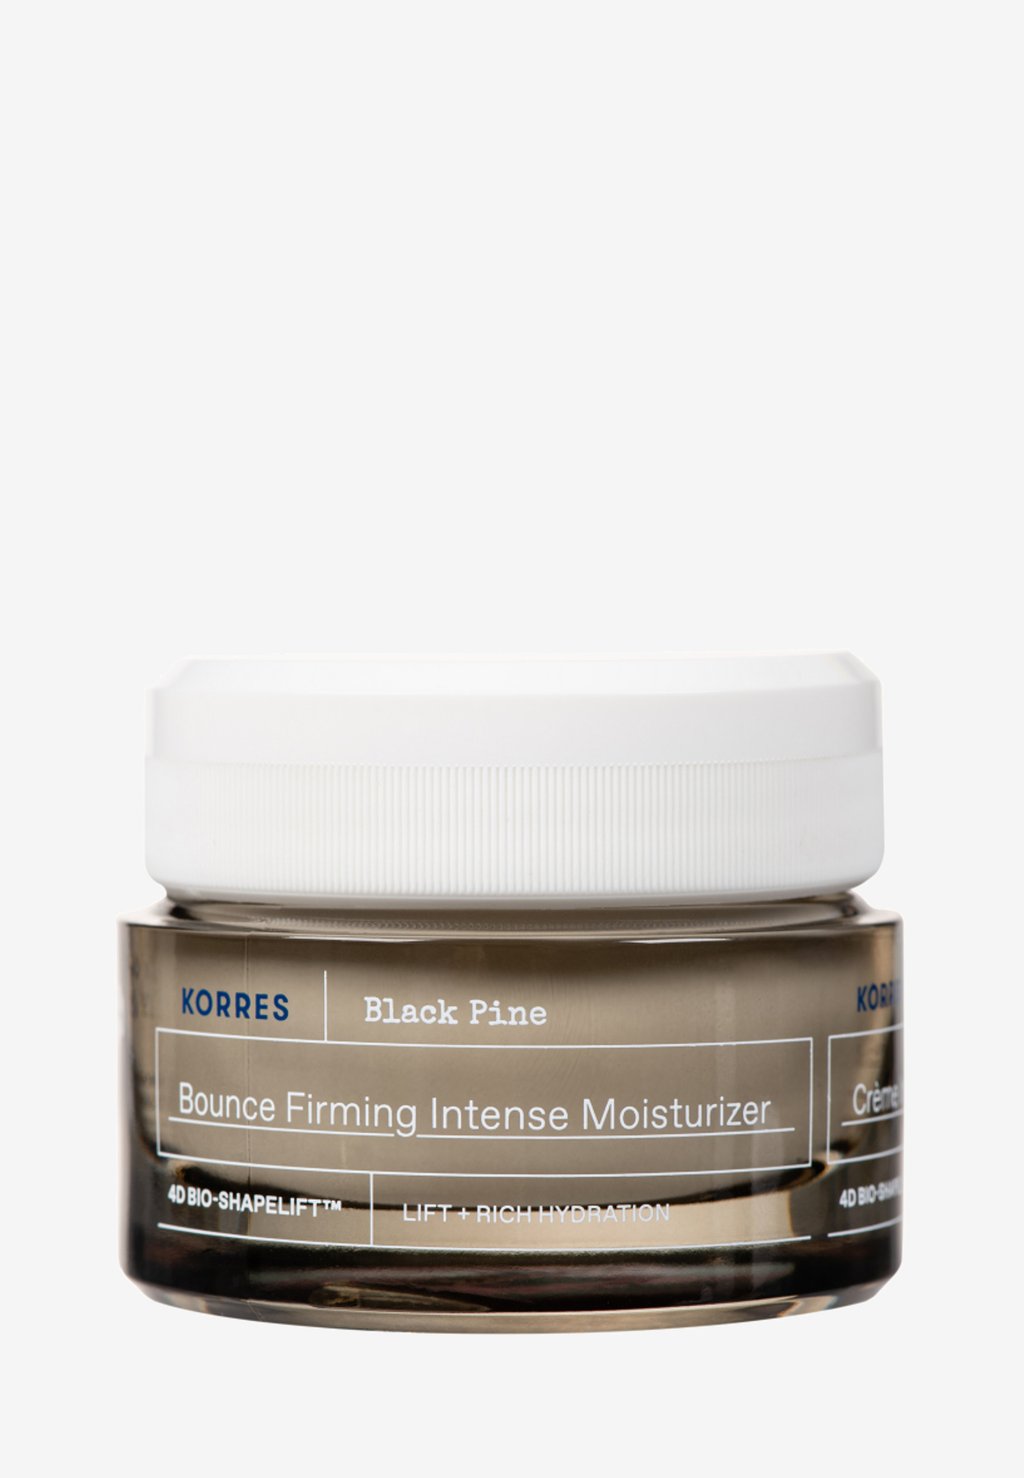 Дневной крем Black Pine 4D Bioshapelift Bounce Firming Intense Moisturizer ( KORRES, цвет neutral